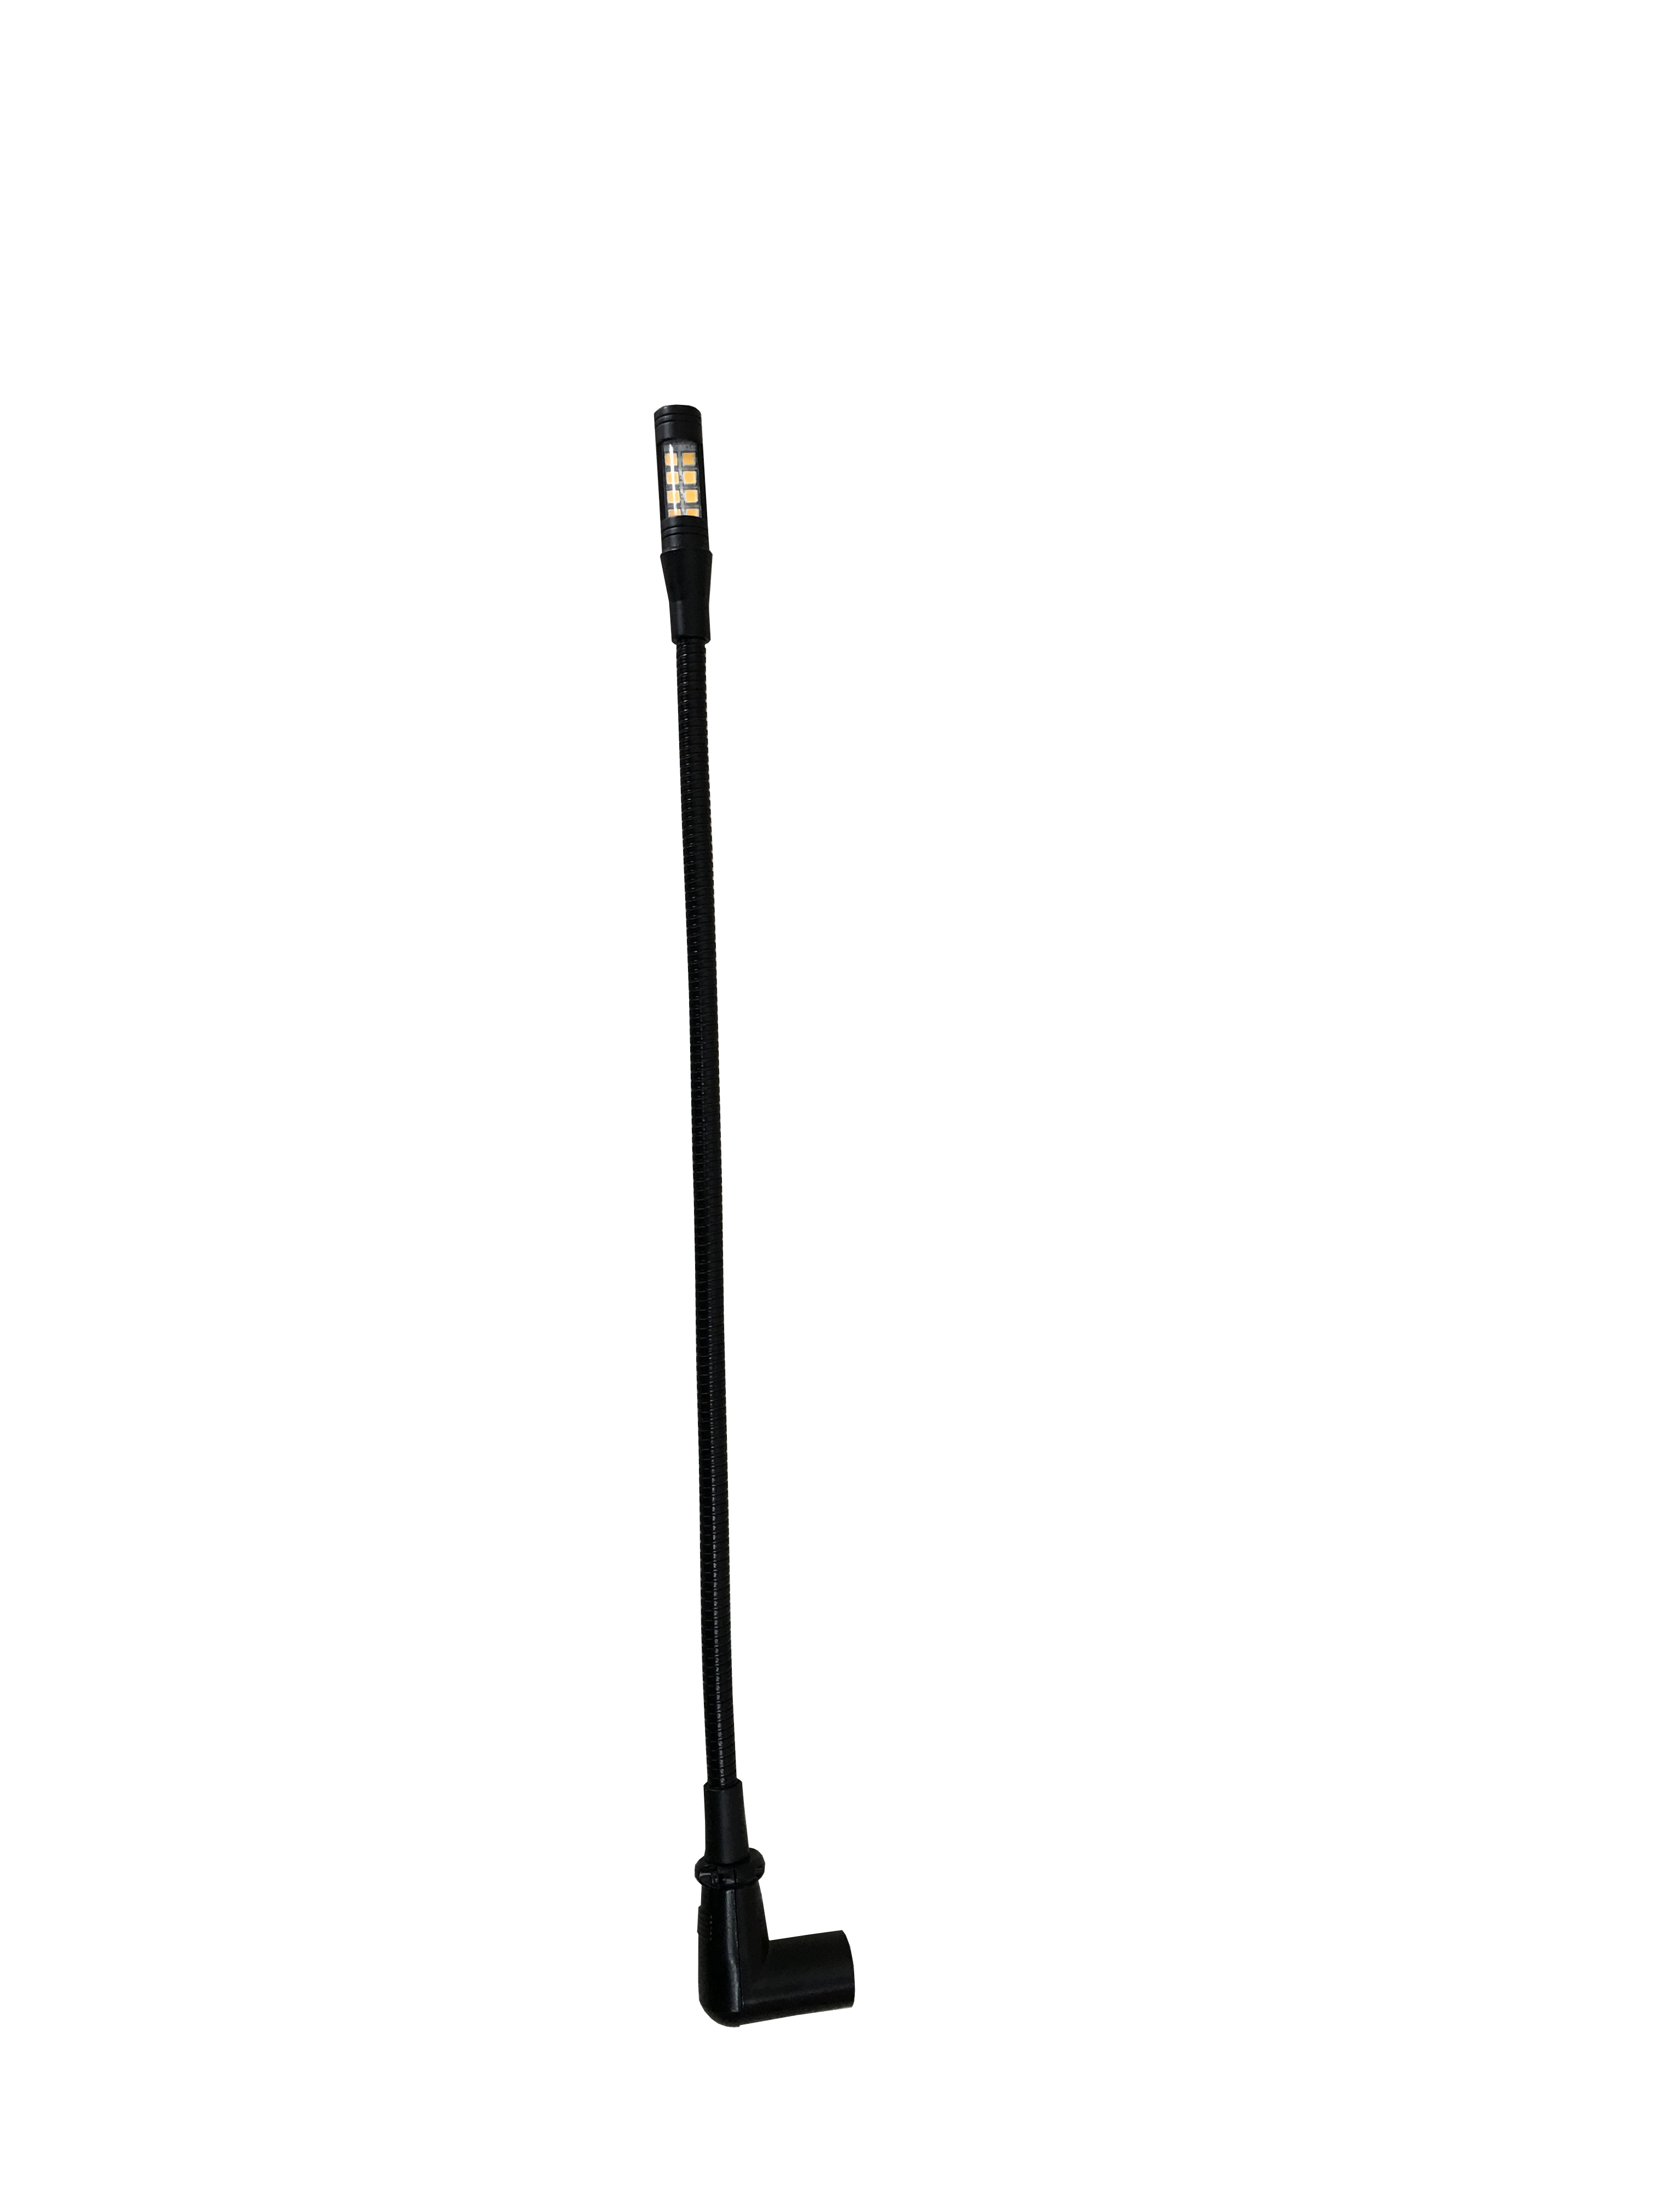 Gooseneck lamp (right angle XLR 3 pin Male) - 45cm